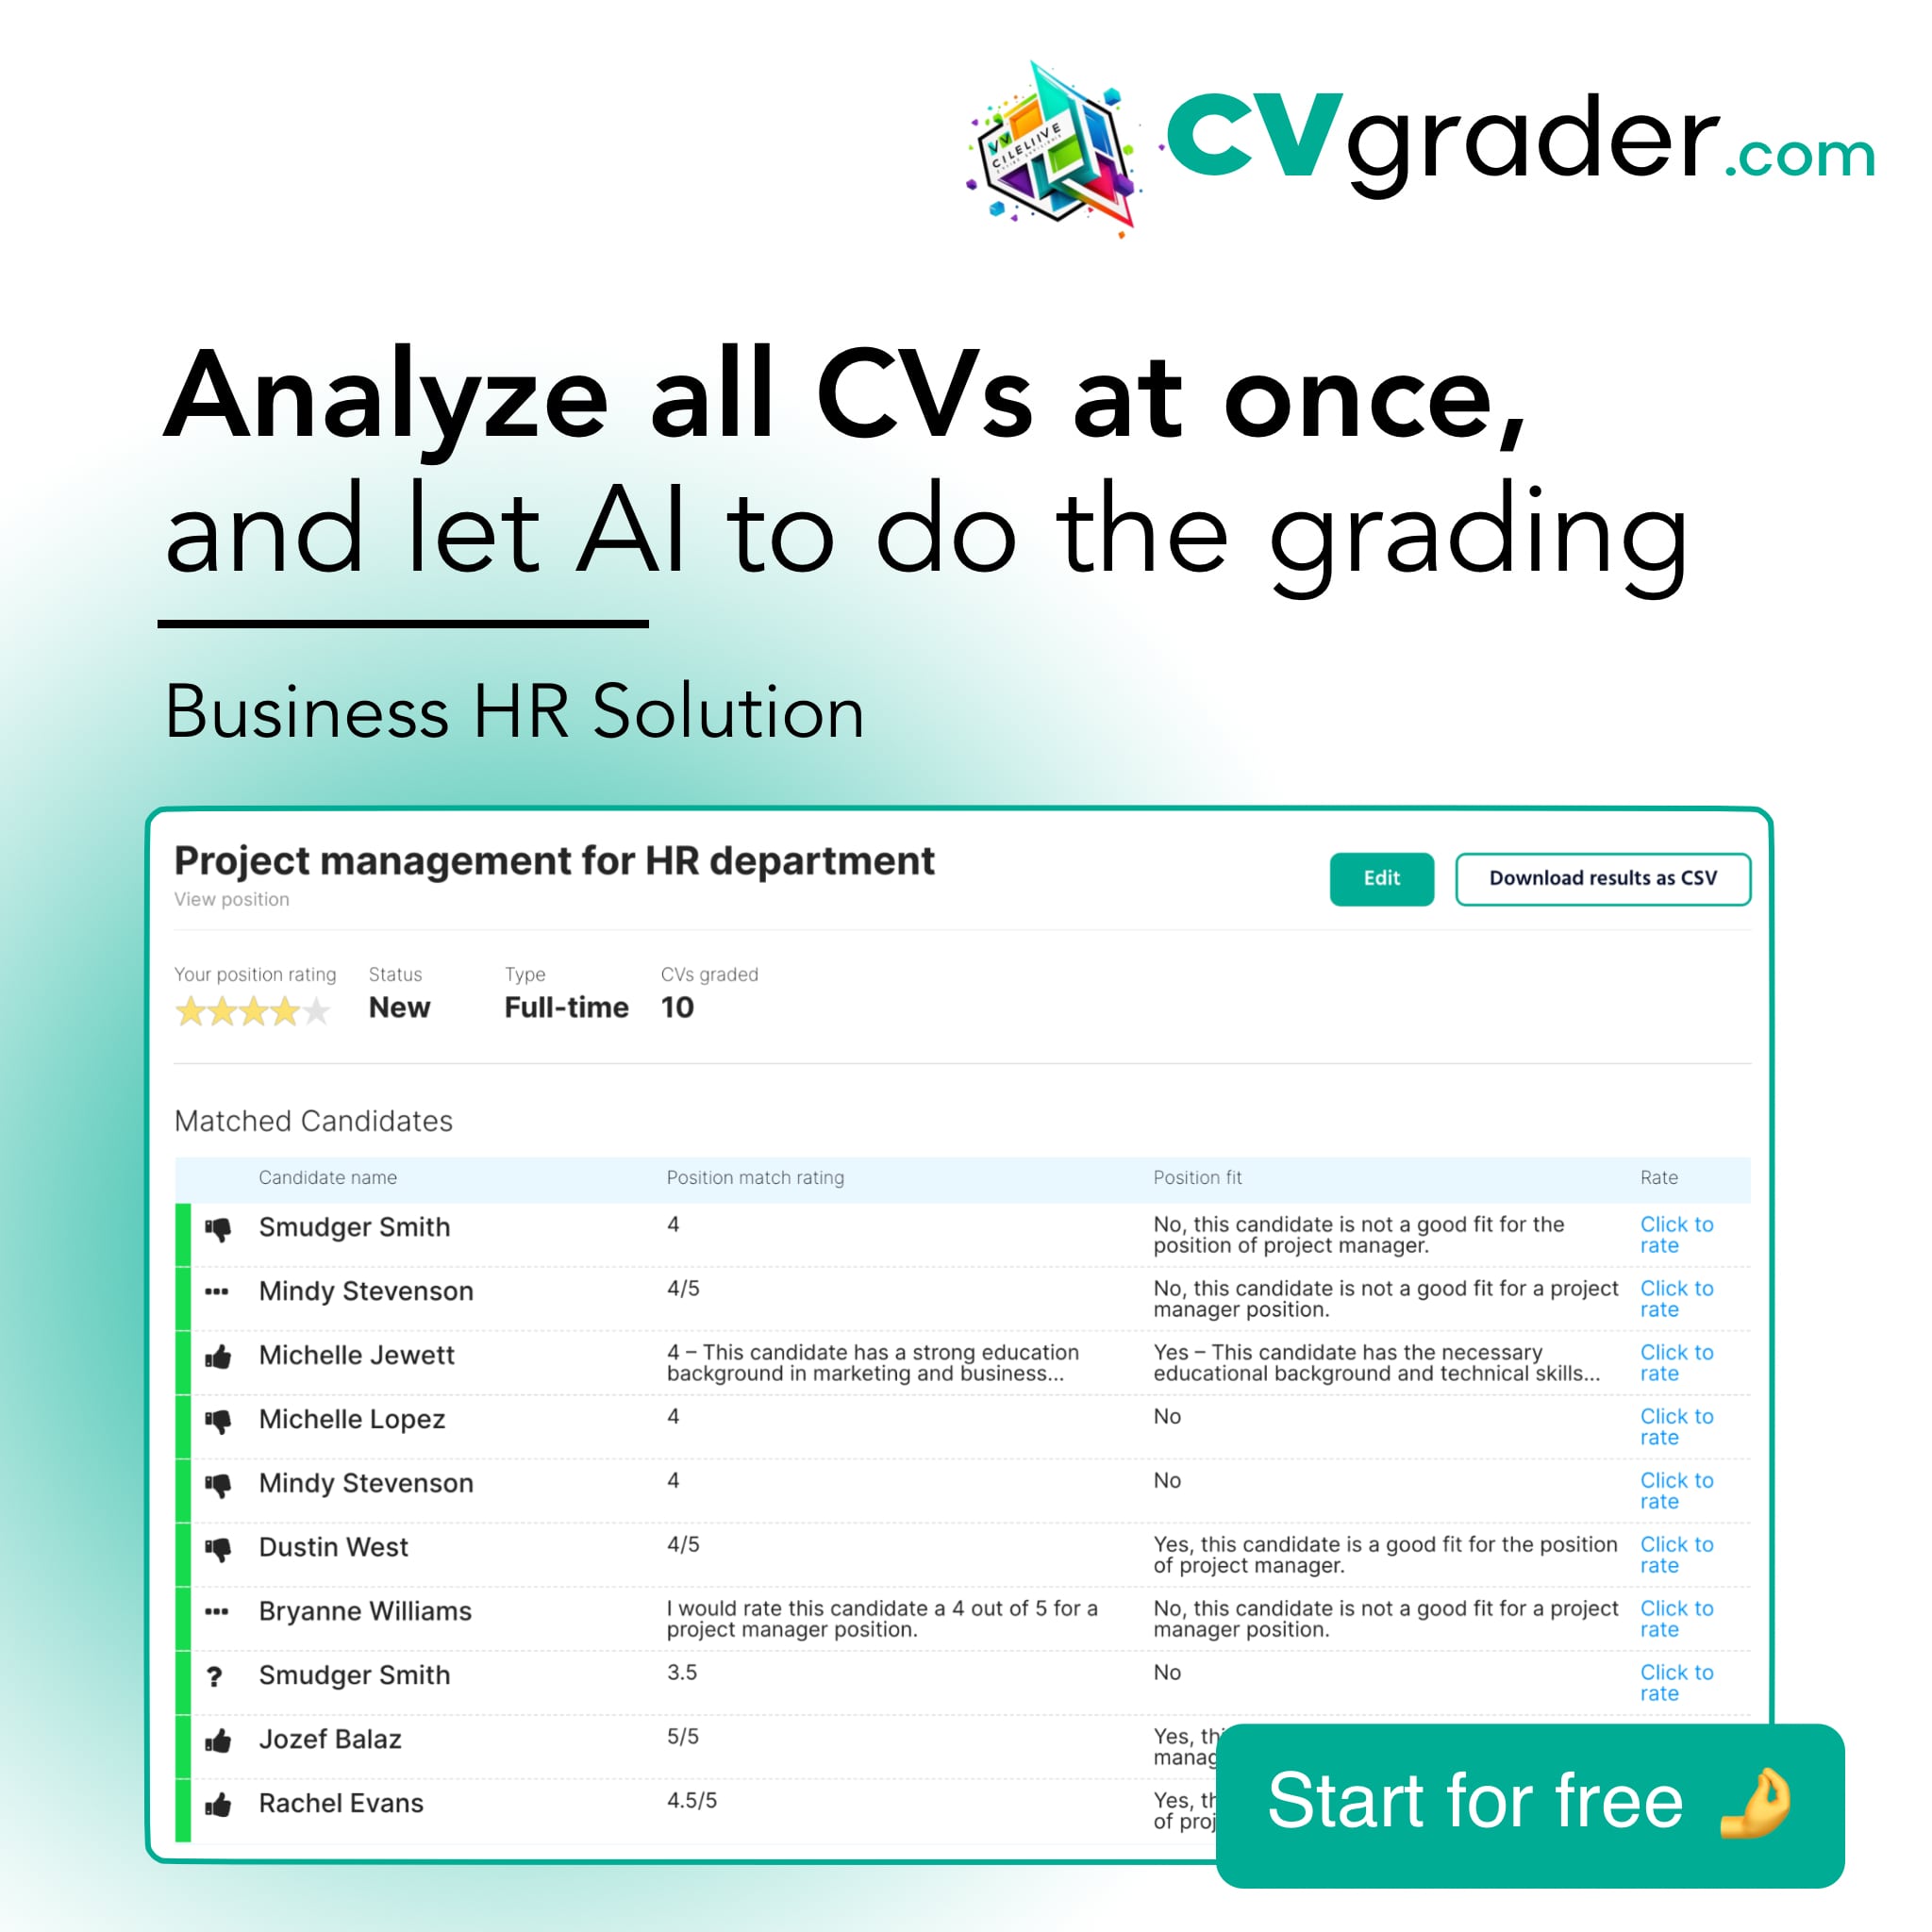 Analyze all CVs at once